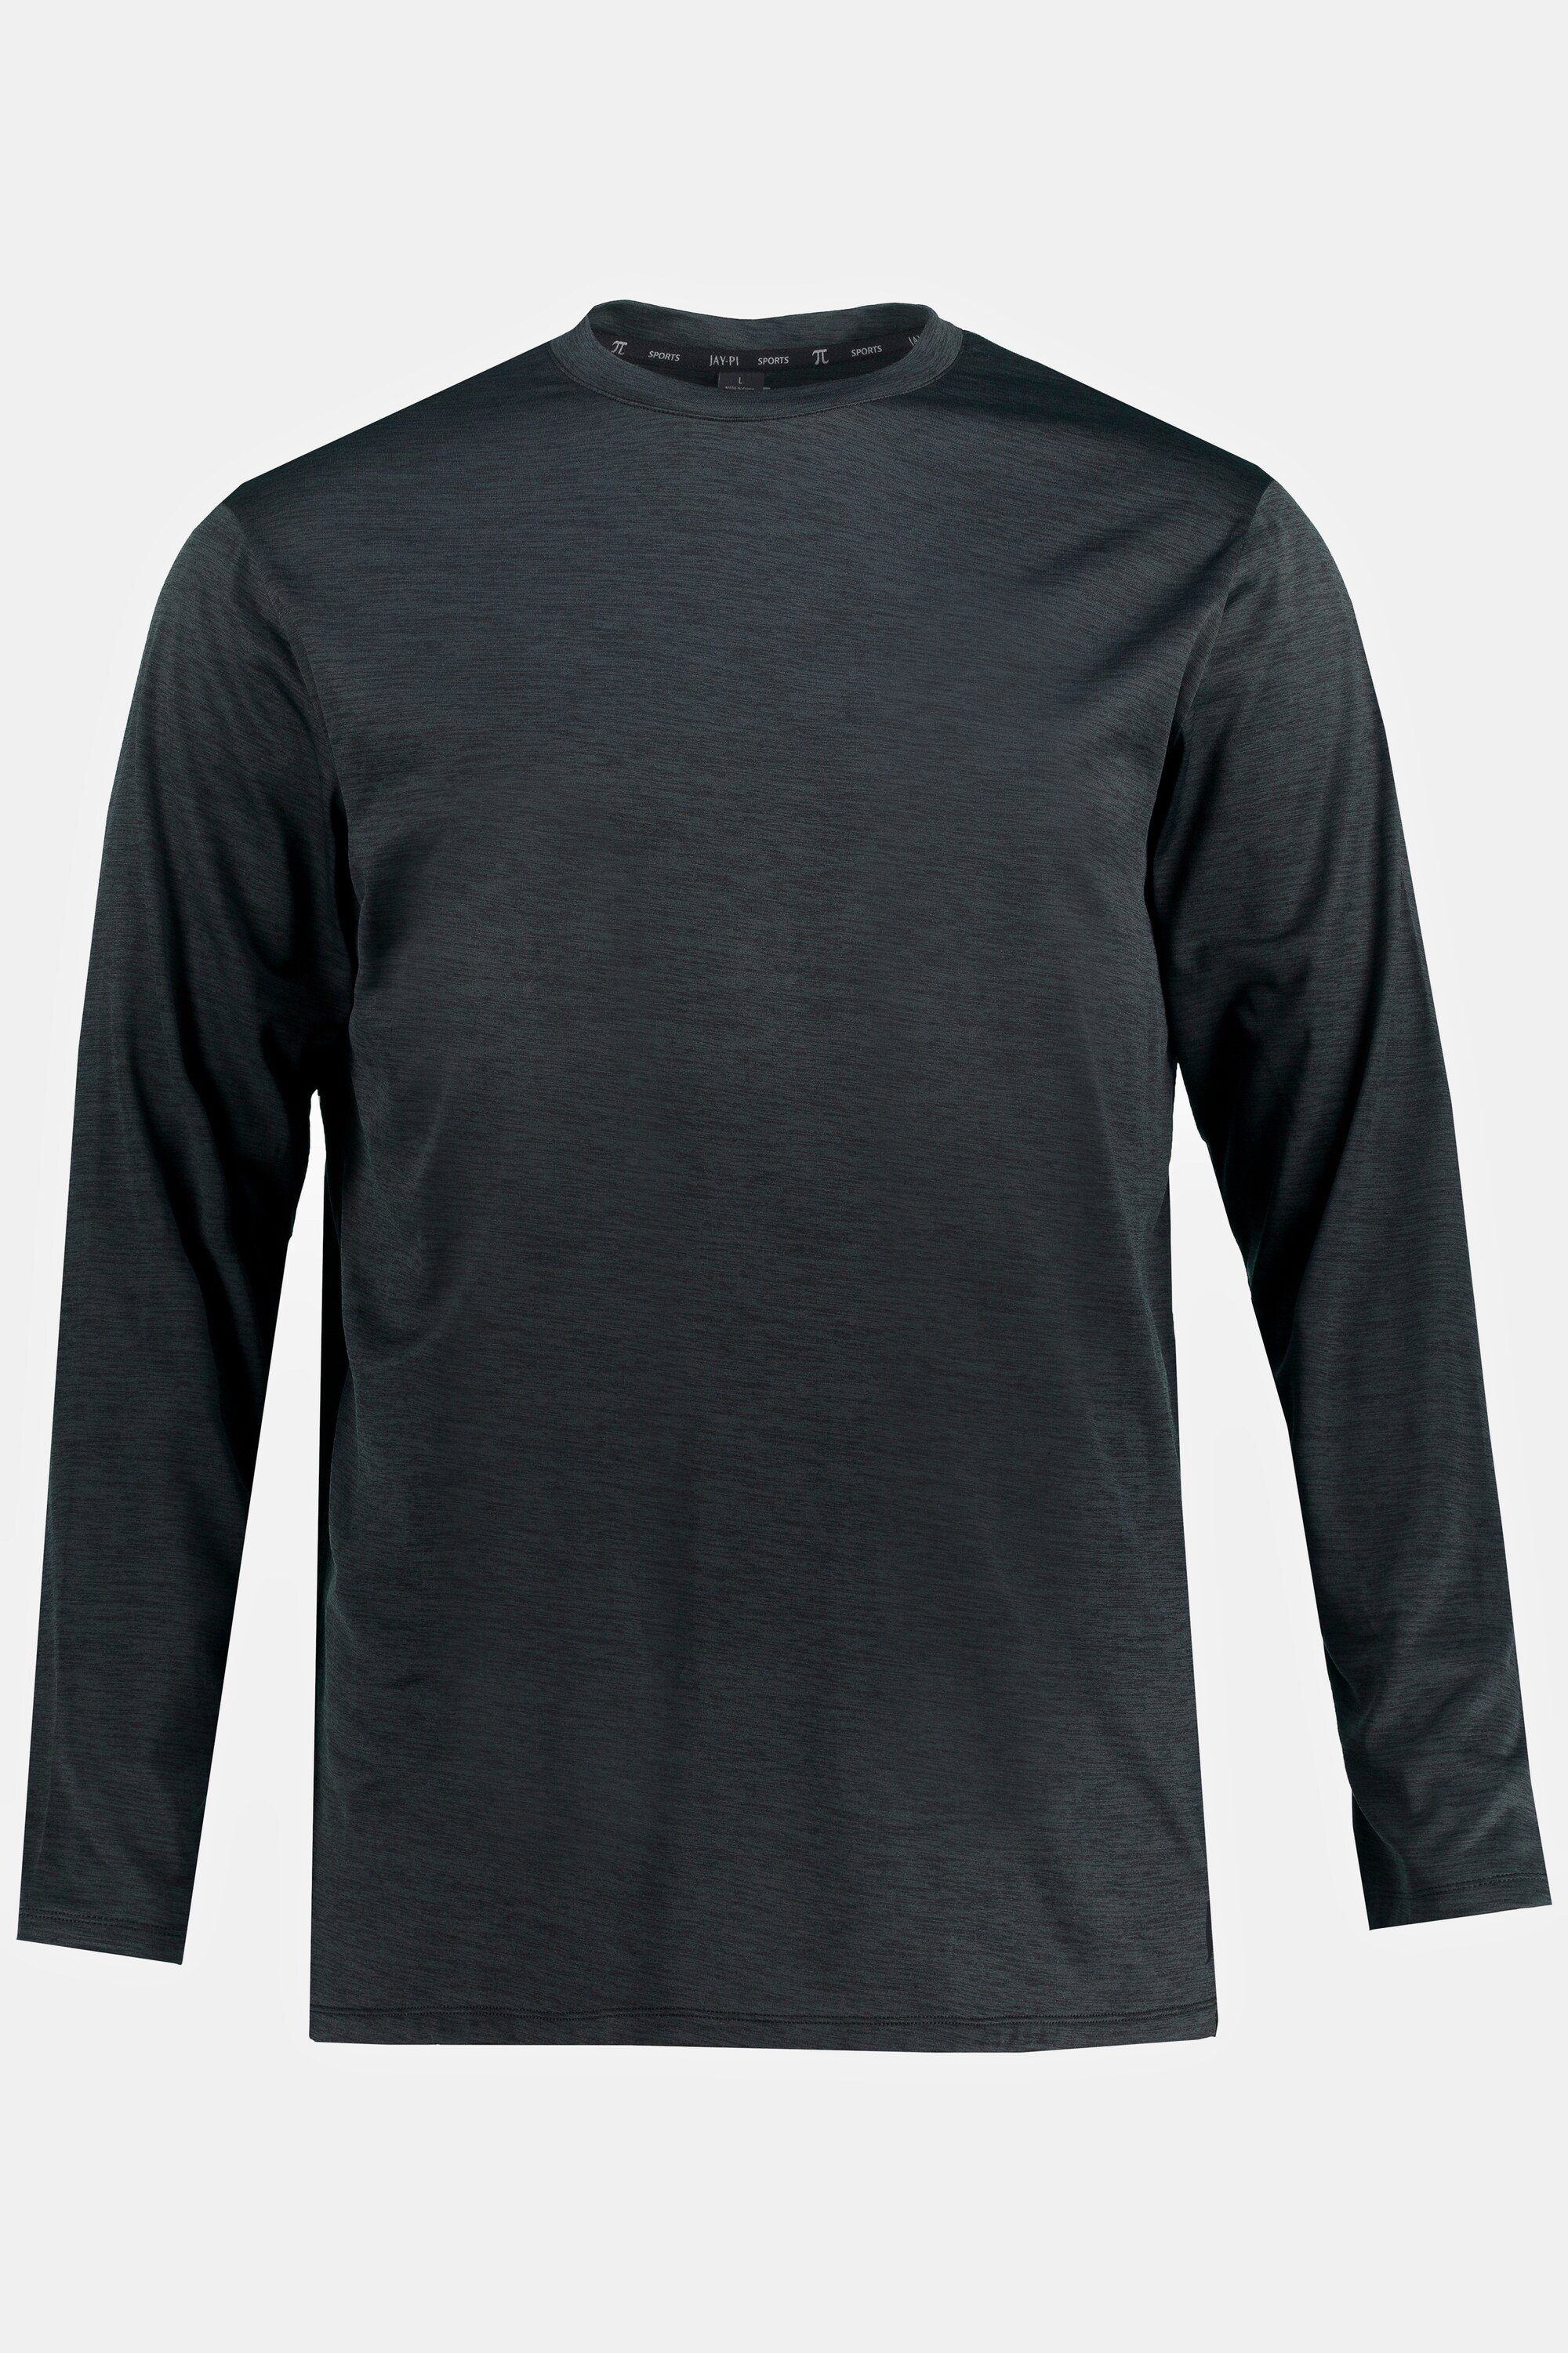 JP1880 Unterhemd atmungsaktiv Langarm Funktions-Unterhemd